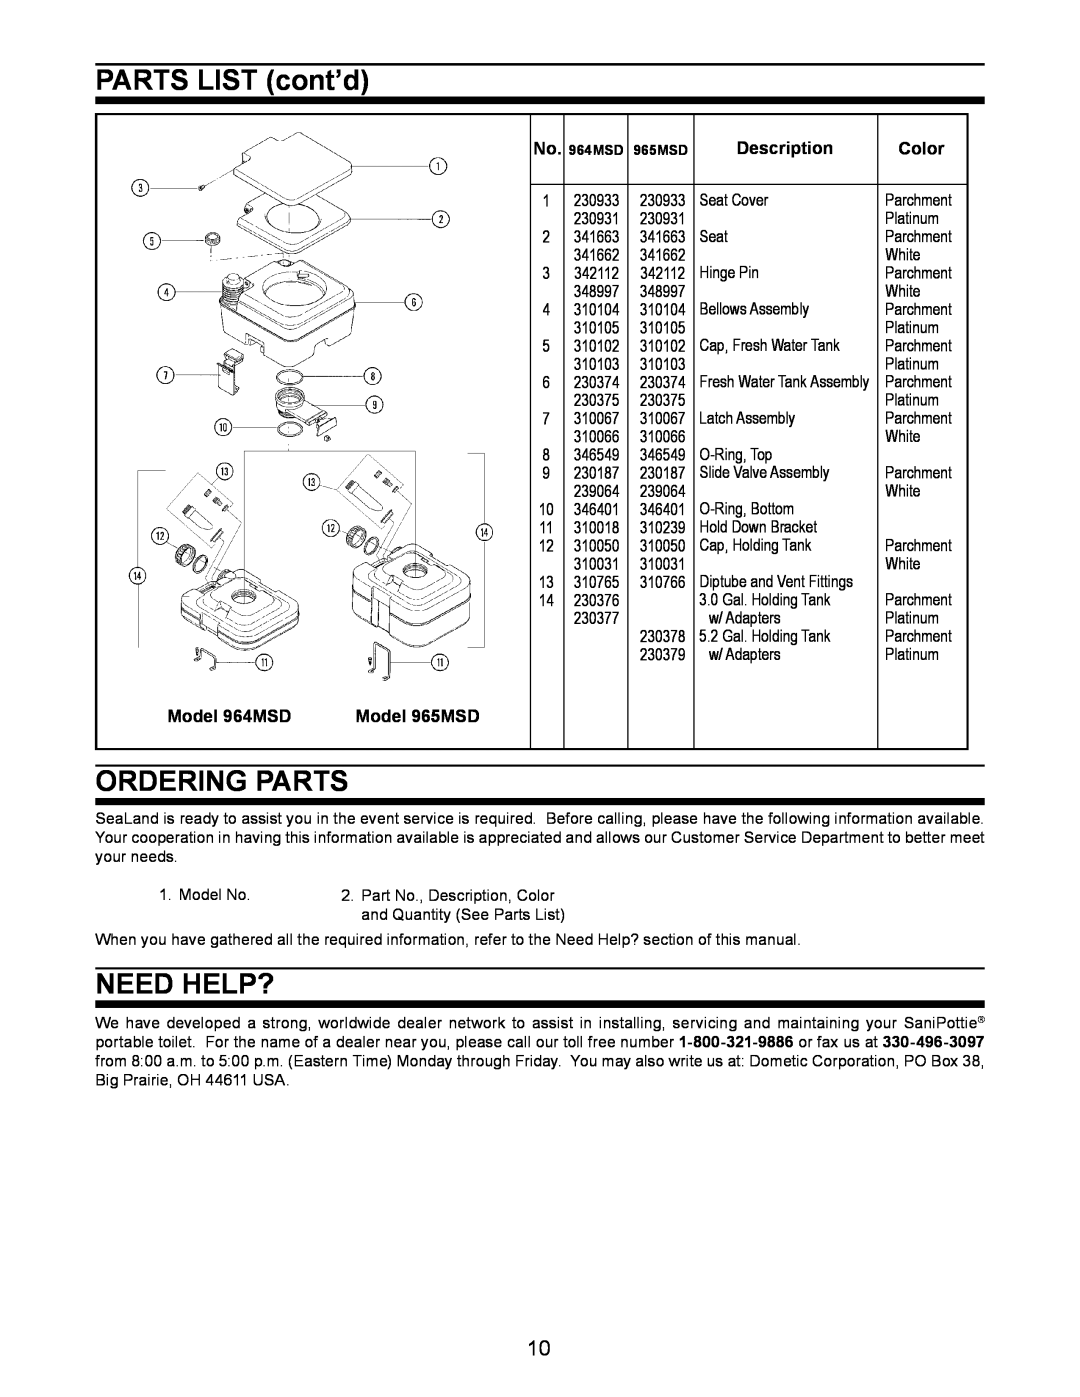 Dometic 966, 962 owner manual Parts List cont’d, ordering parts, need help?, Description, Color, Model 964MSD, Model 965MSD 